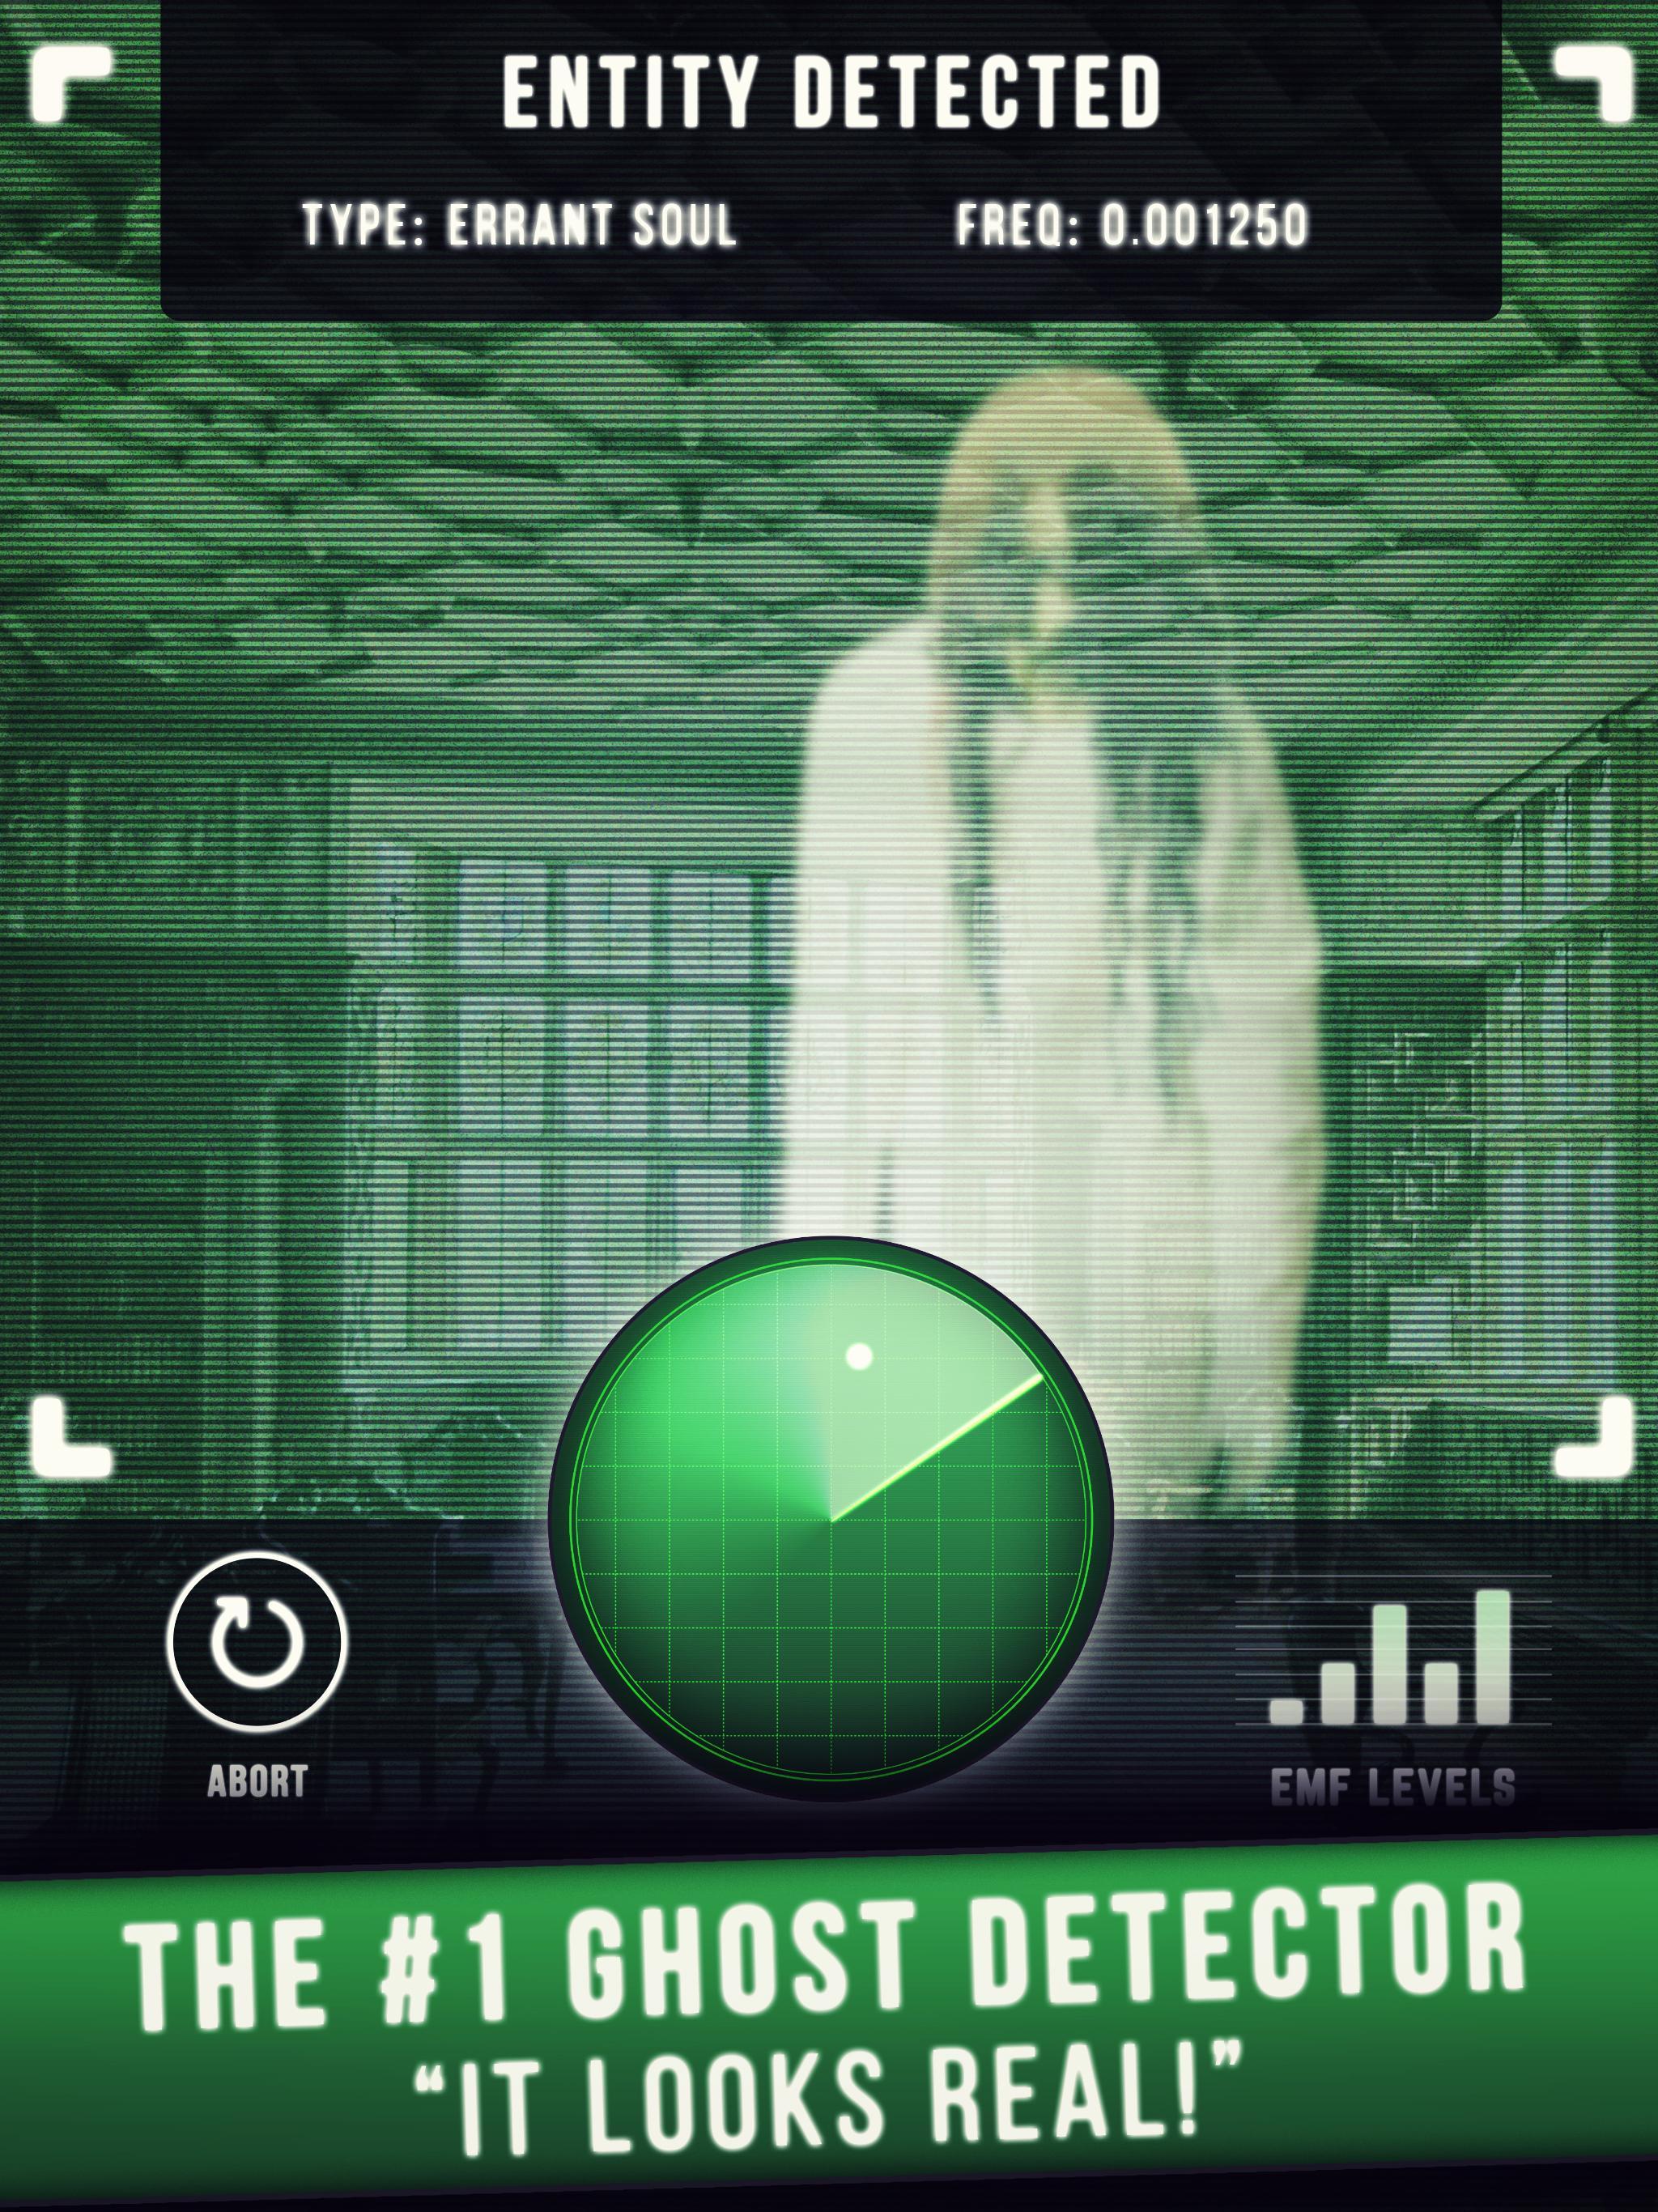 Ghost app free download microsoft wireless comfort keyboard 5000 driver download